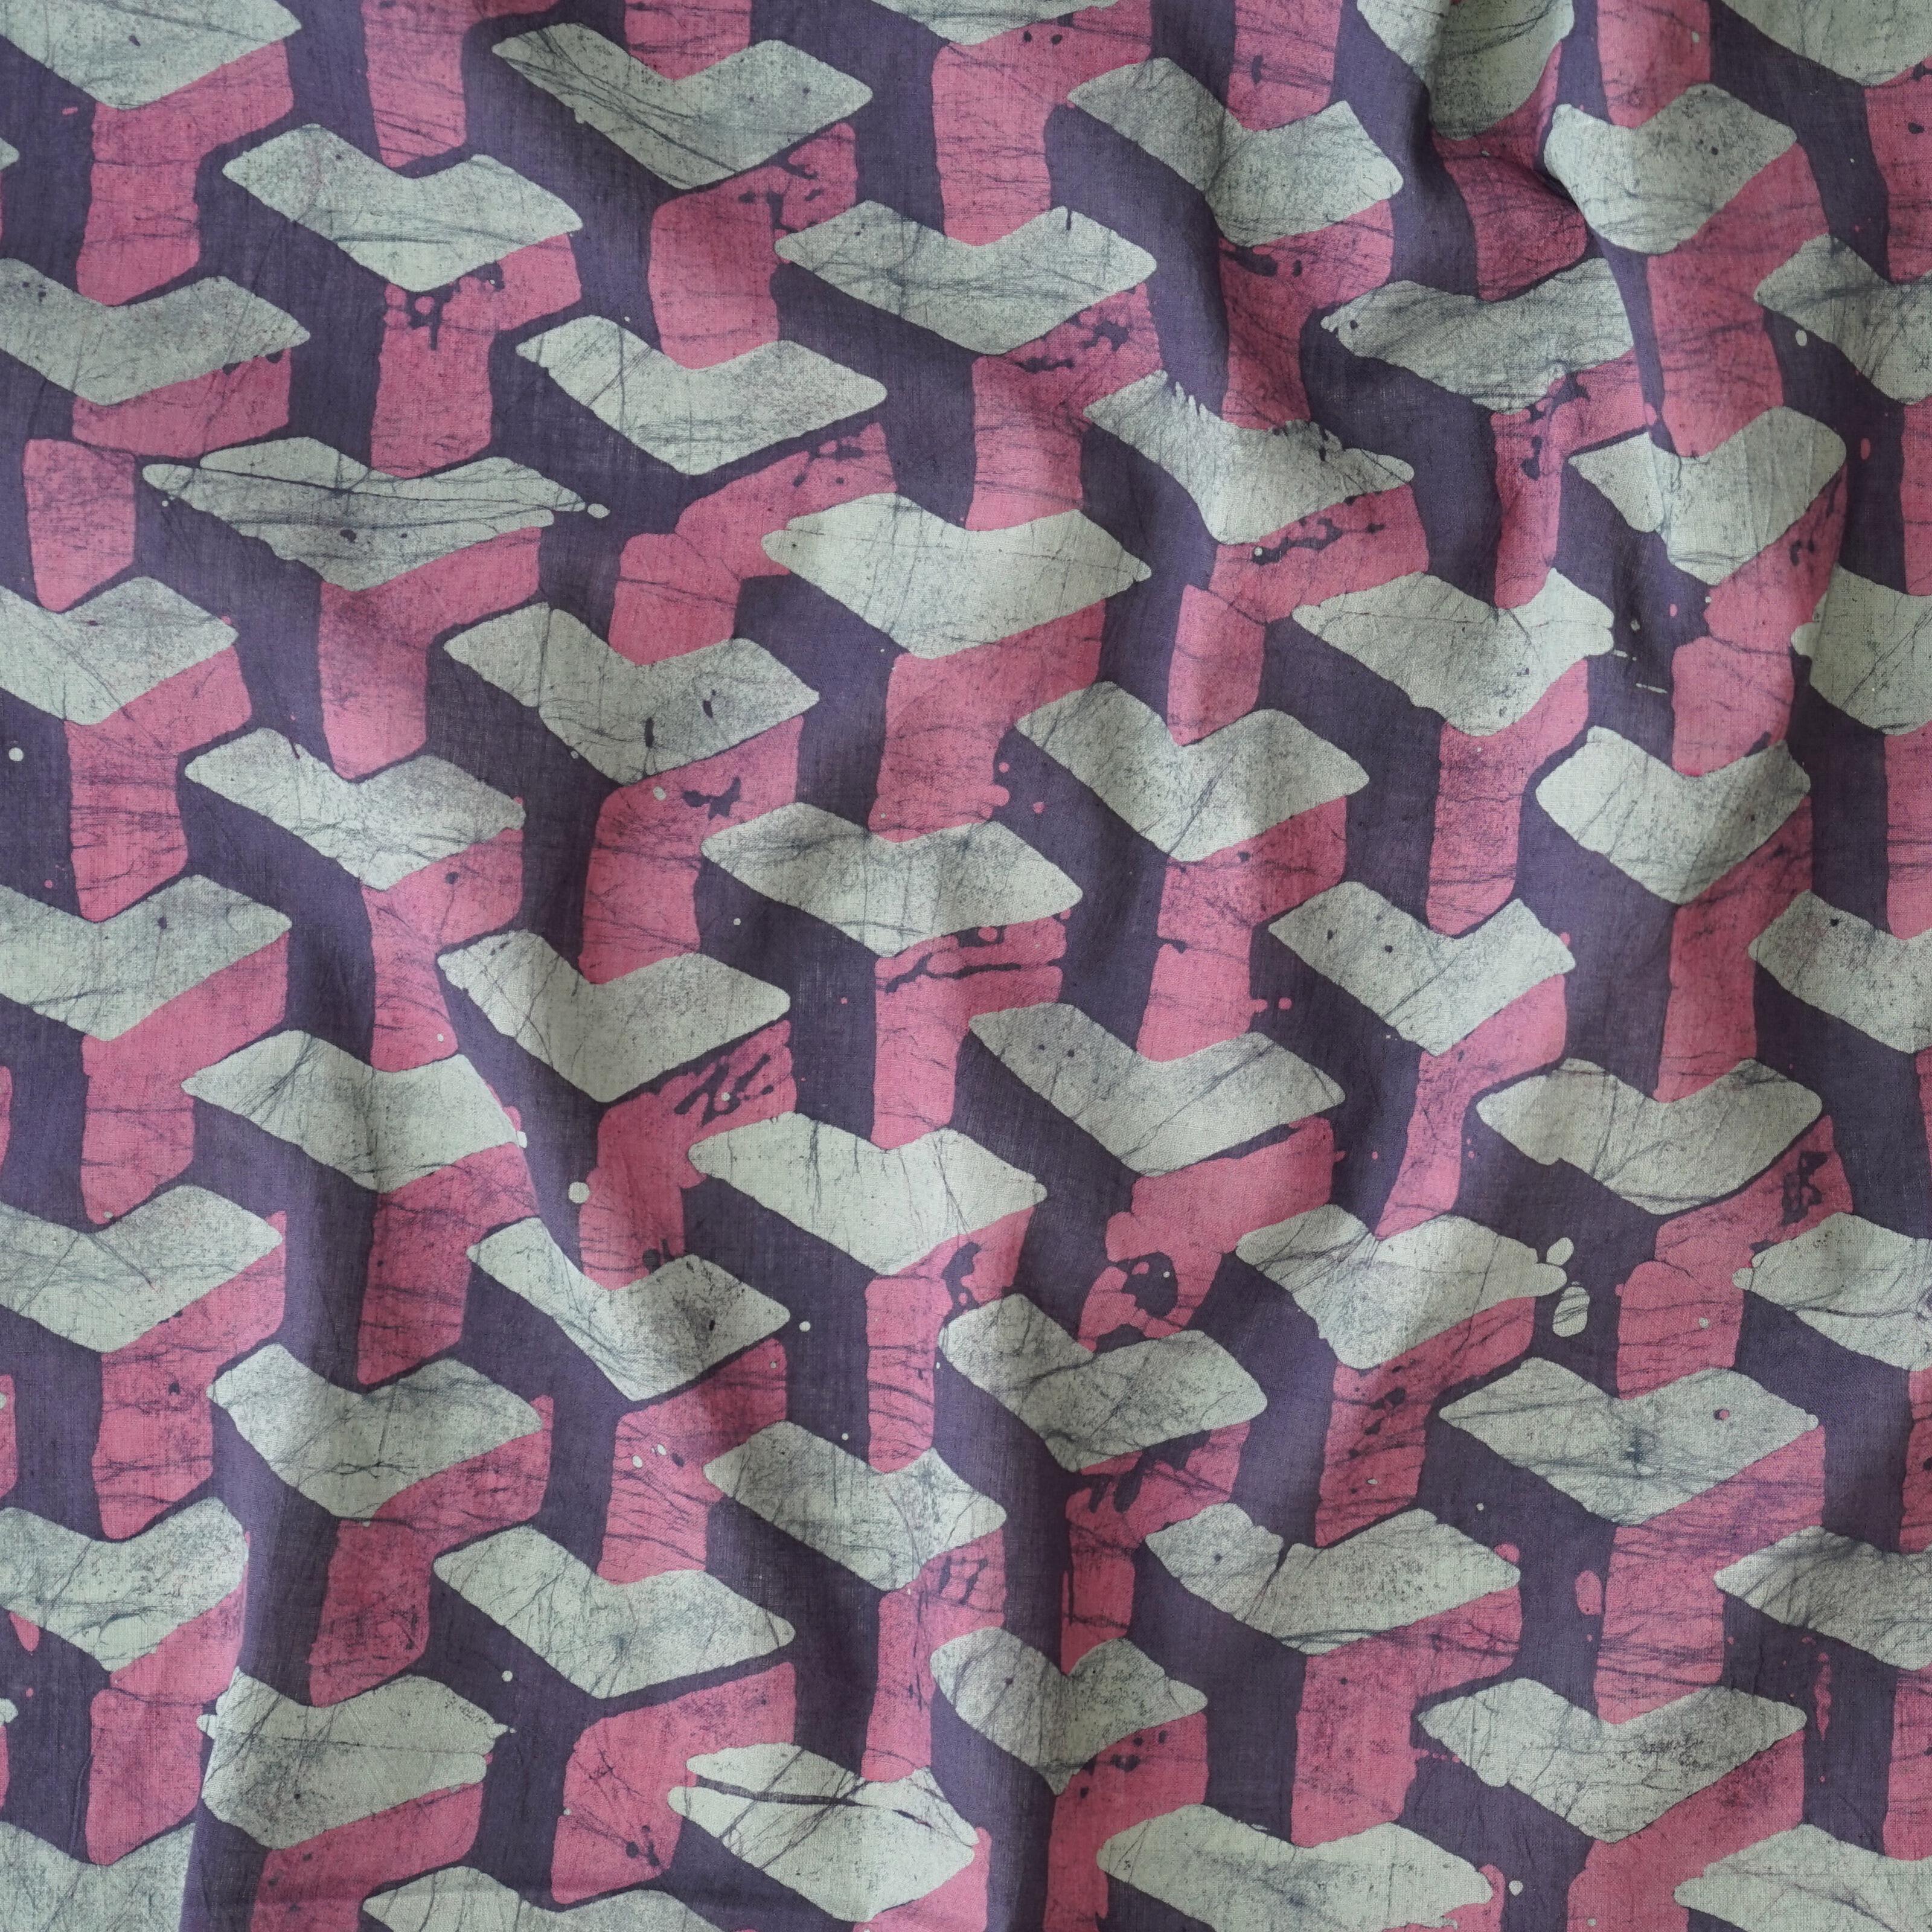 100% Block-Printed Batik Cotton Fabric From India - Walkway Motif - Contrast